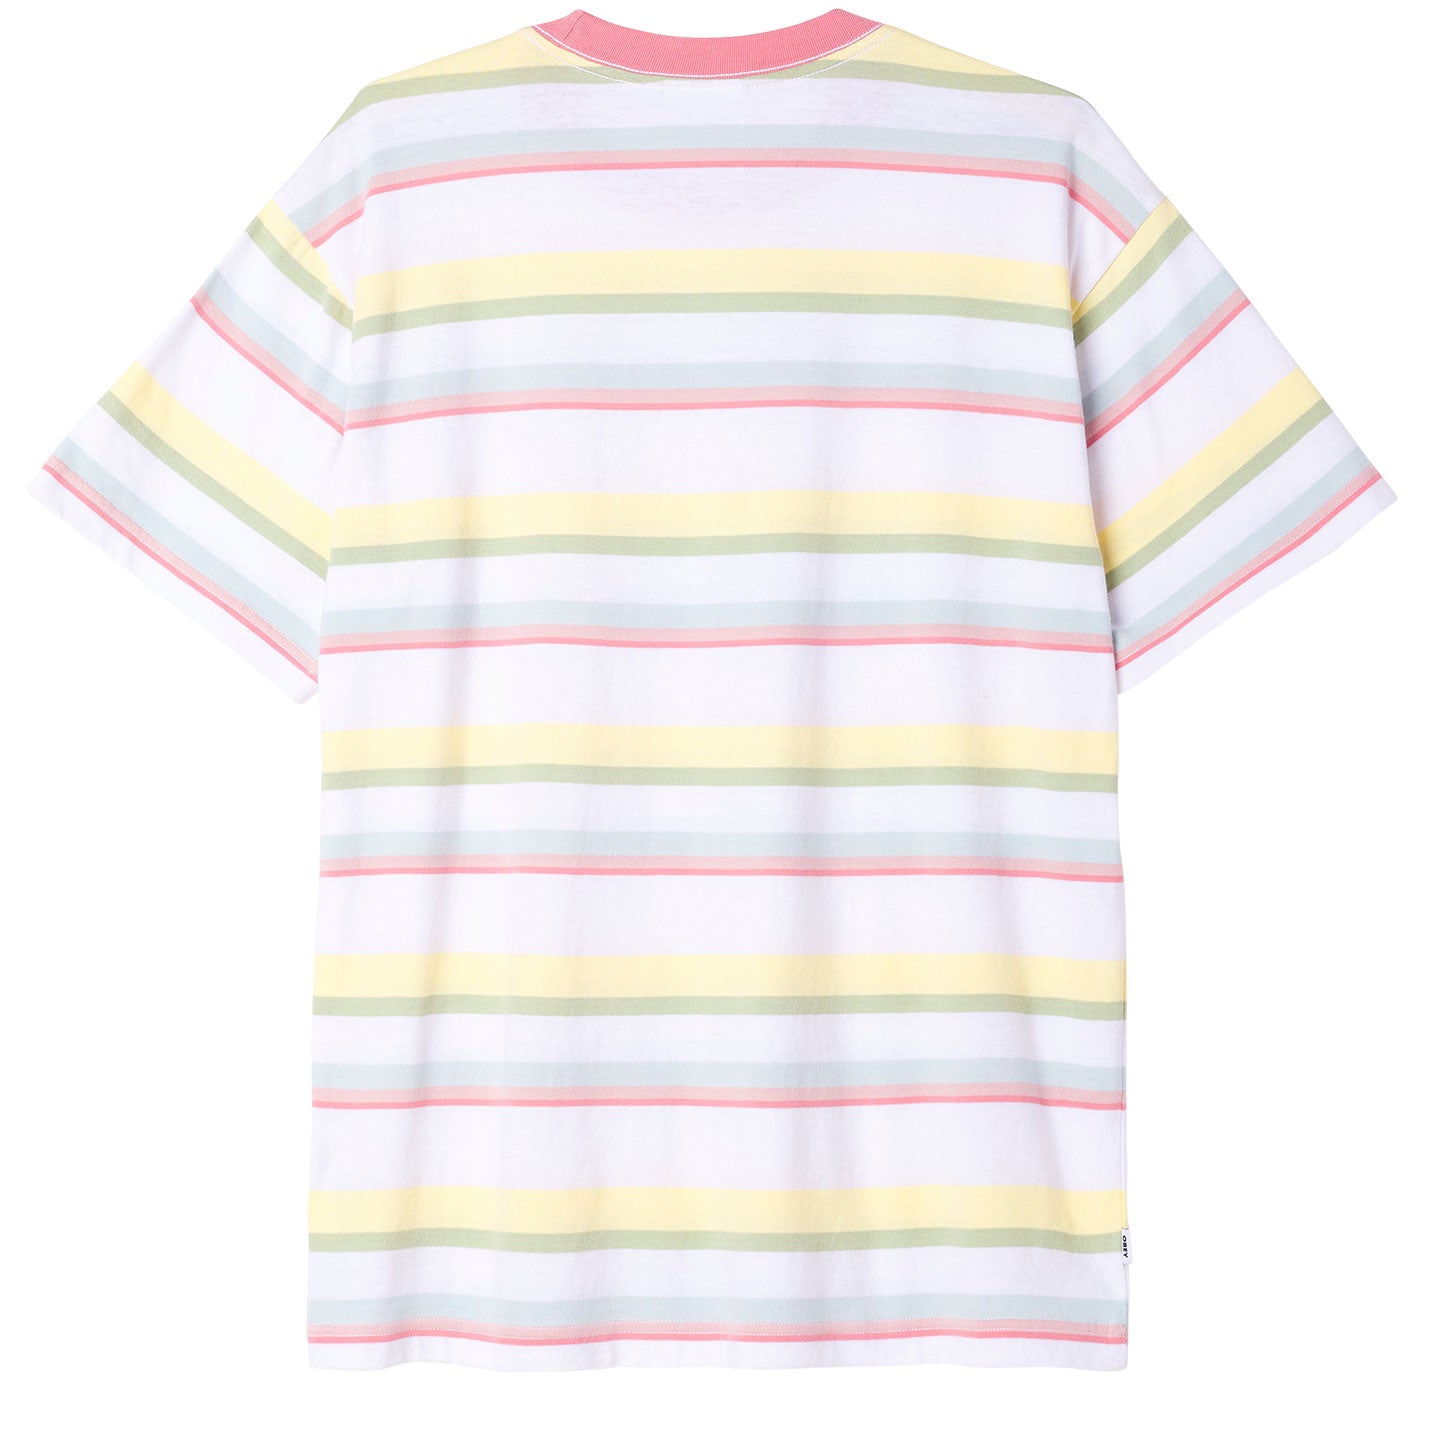 OBEY Sava Stripe T-Shirt